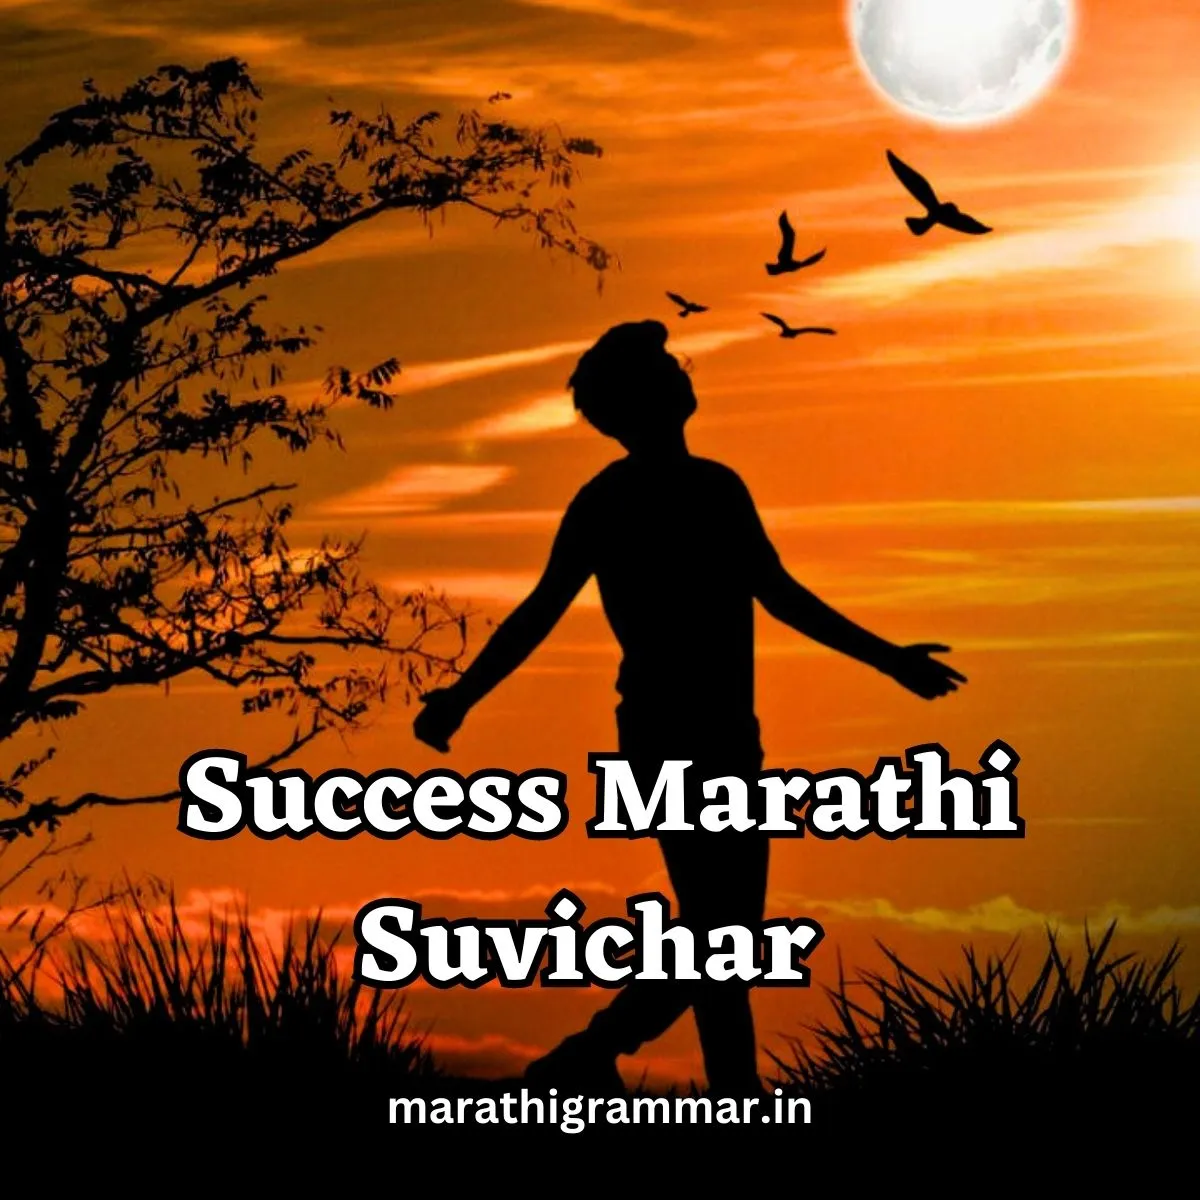 250+ Success Marathi Suvichar। Inspirational Marathi Suvichar। मराठी प्रेरणादायी सुविचार